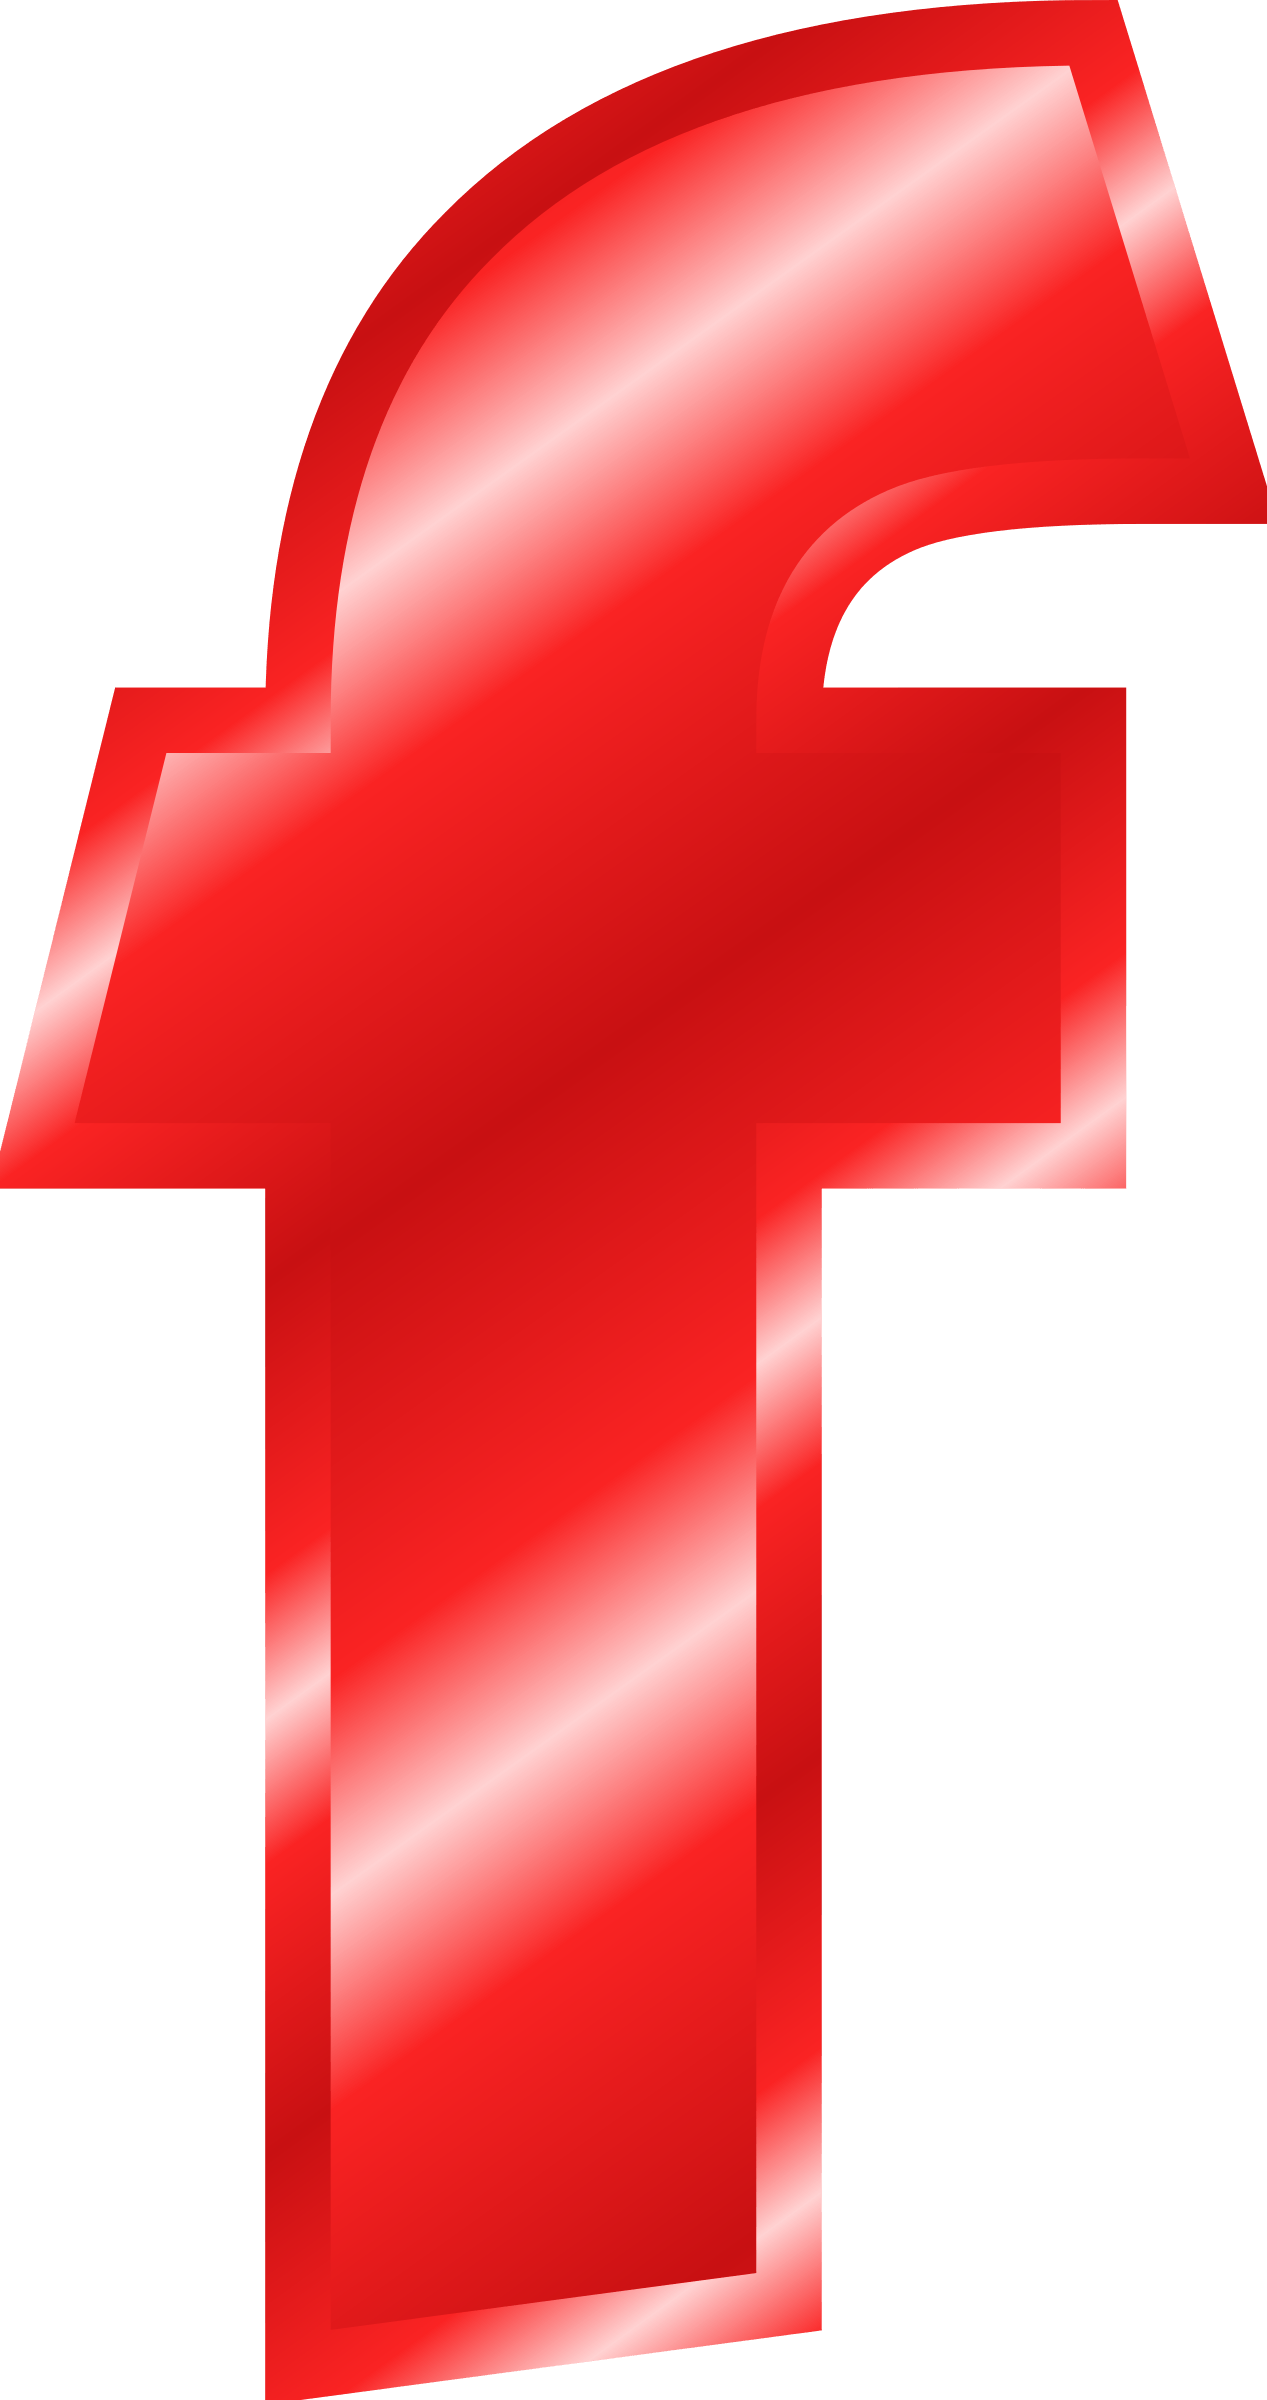 Red Letter F Logo - Letter F PNG images free download